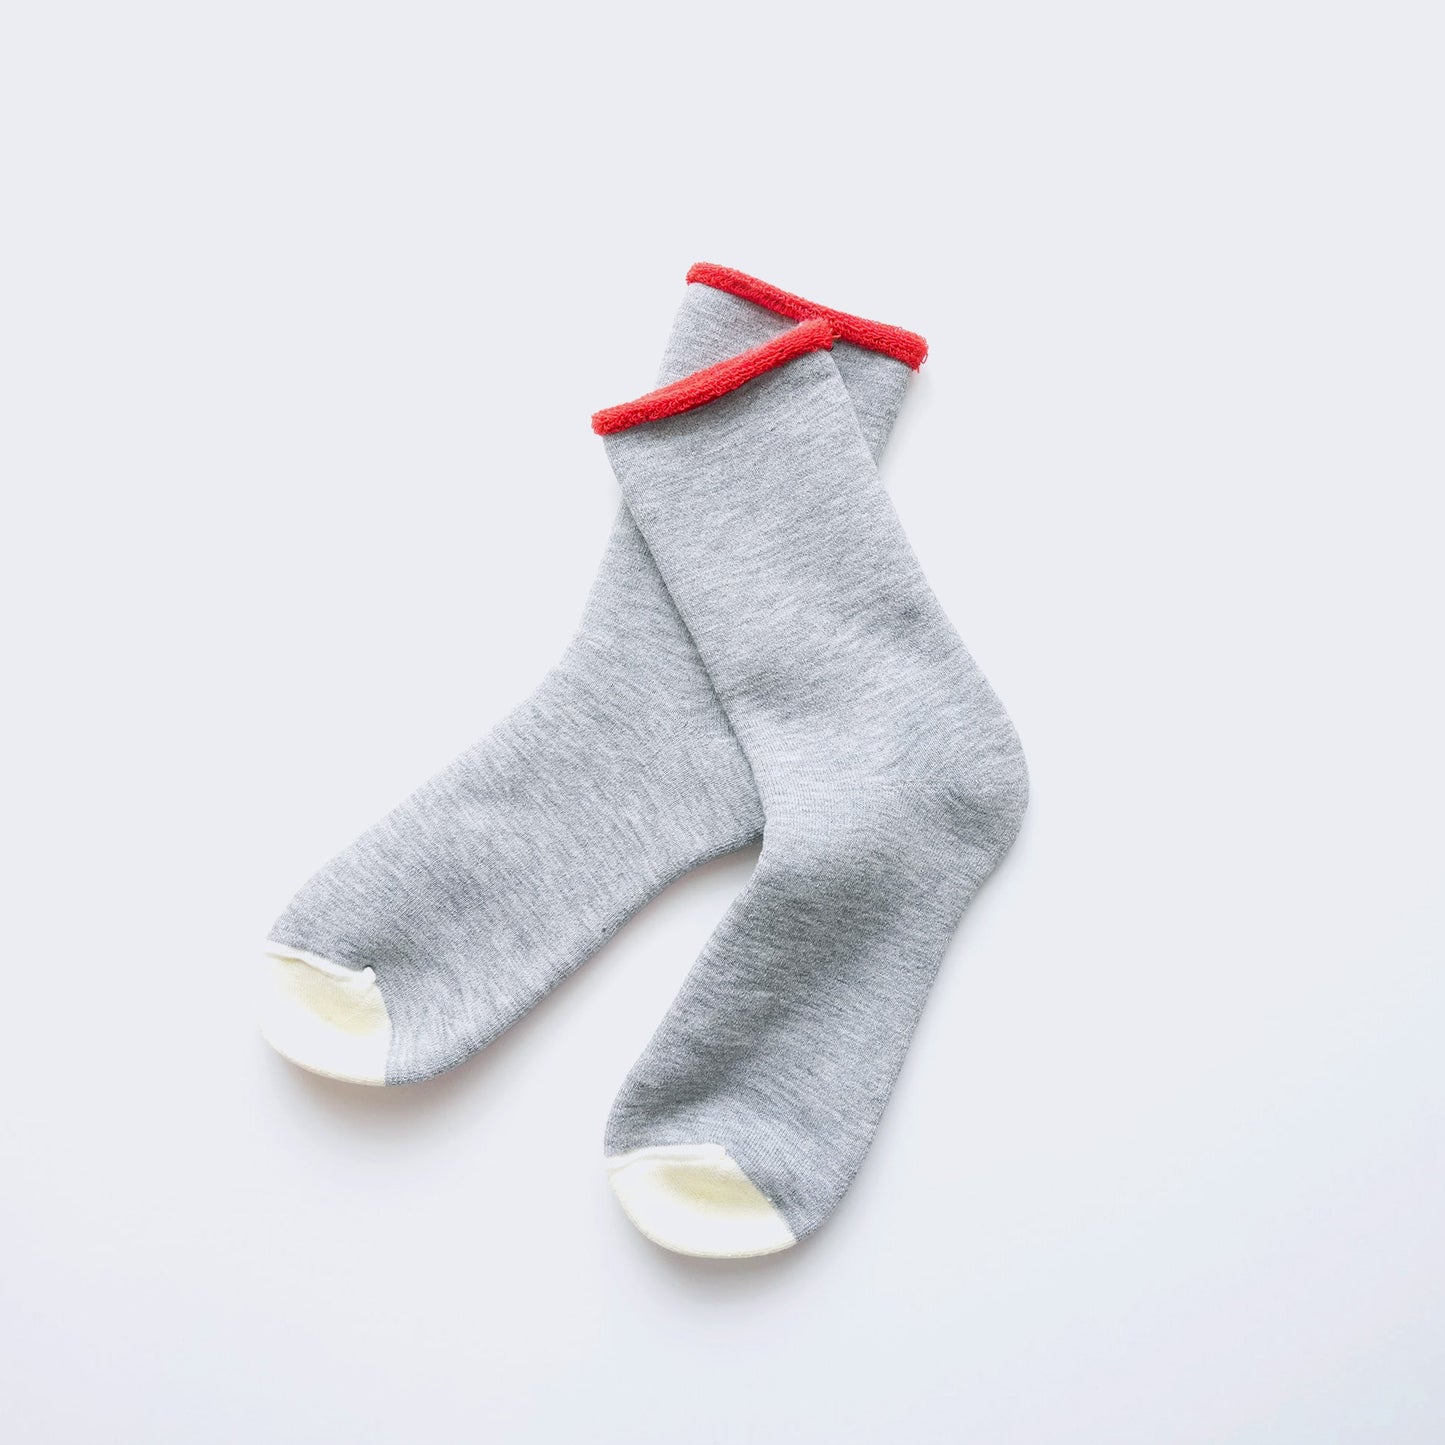 SIMPLE-rich terry socks